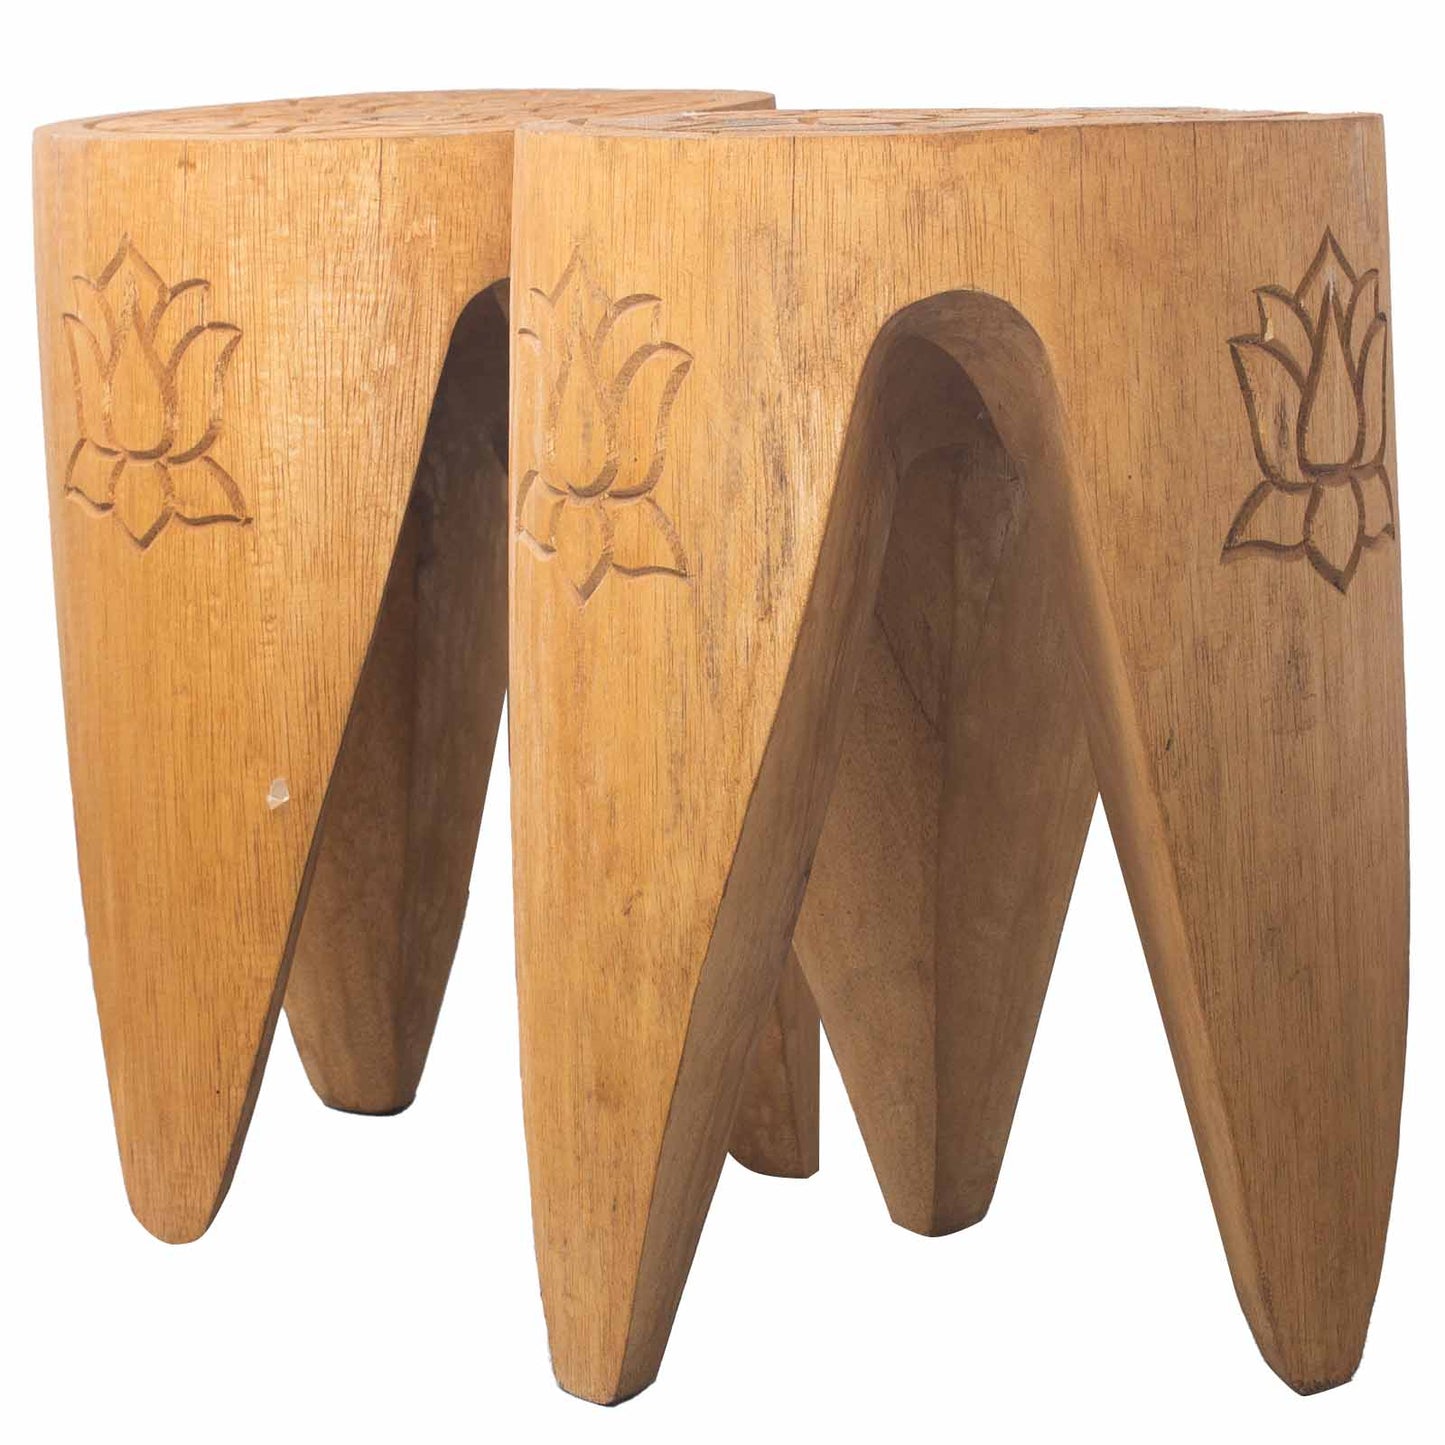 Interlocking Wooden Tribal Tables / Stools - Large